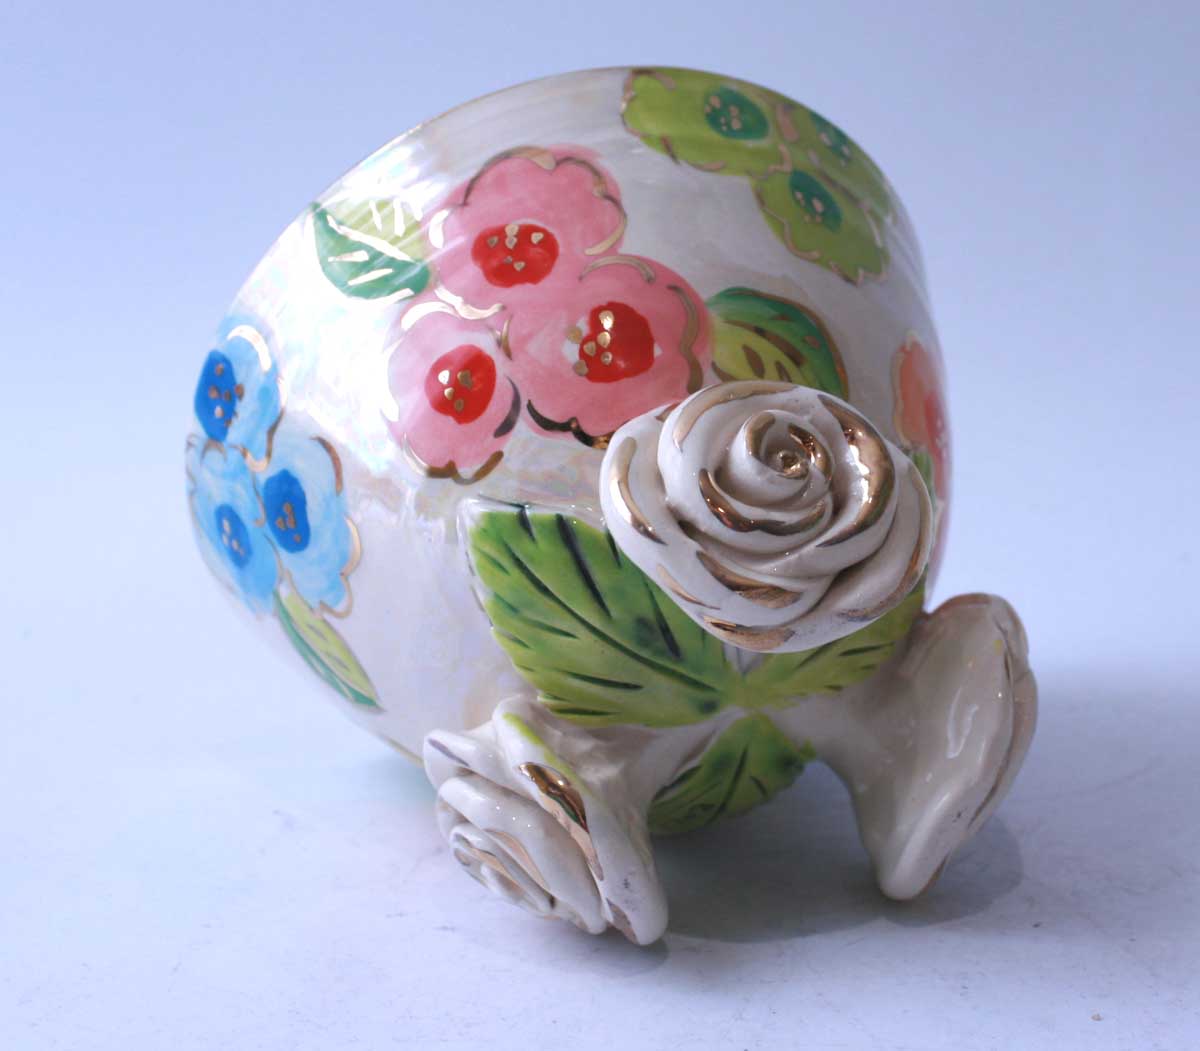 Rose Footed Bowl in Petit Fleur